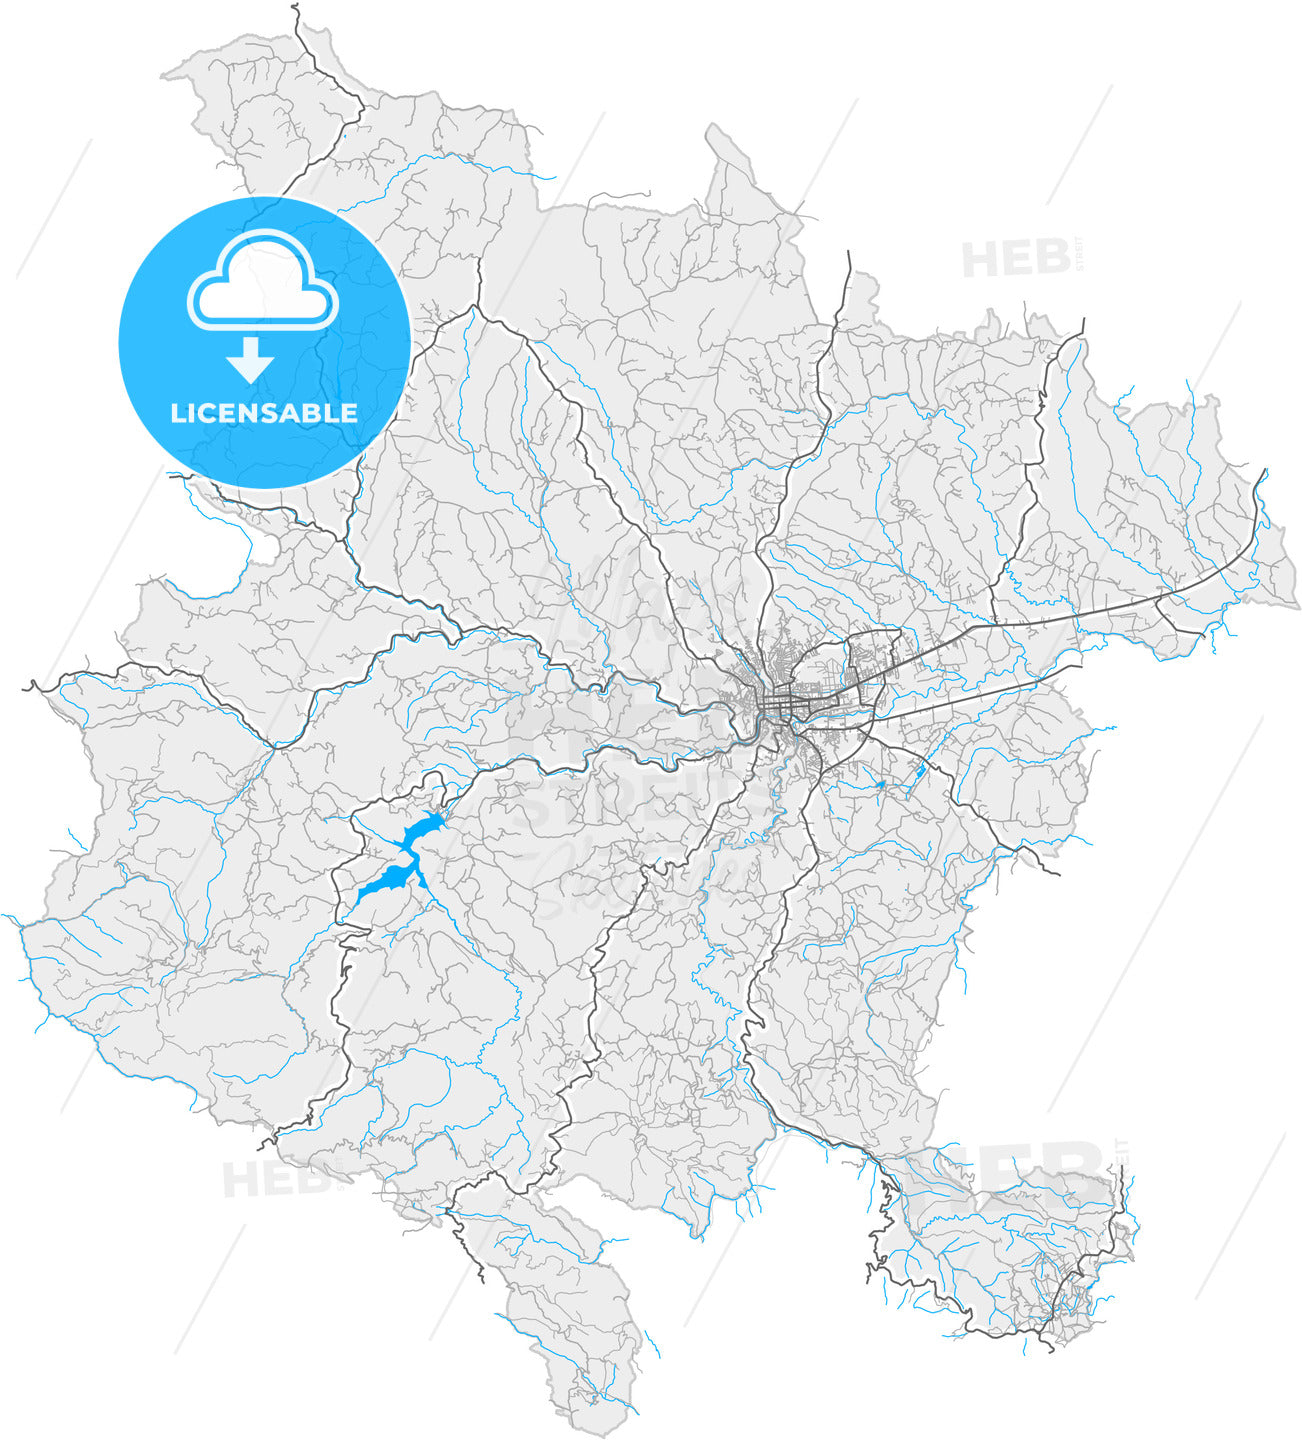 Valjevo, Kolubara, Serbia, high quality vector map